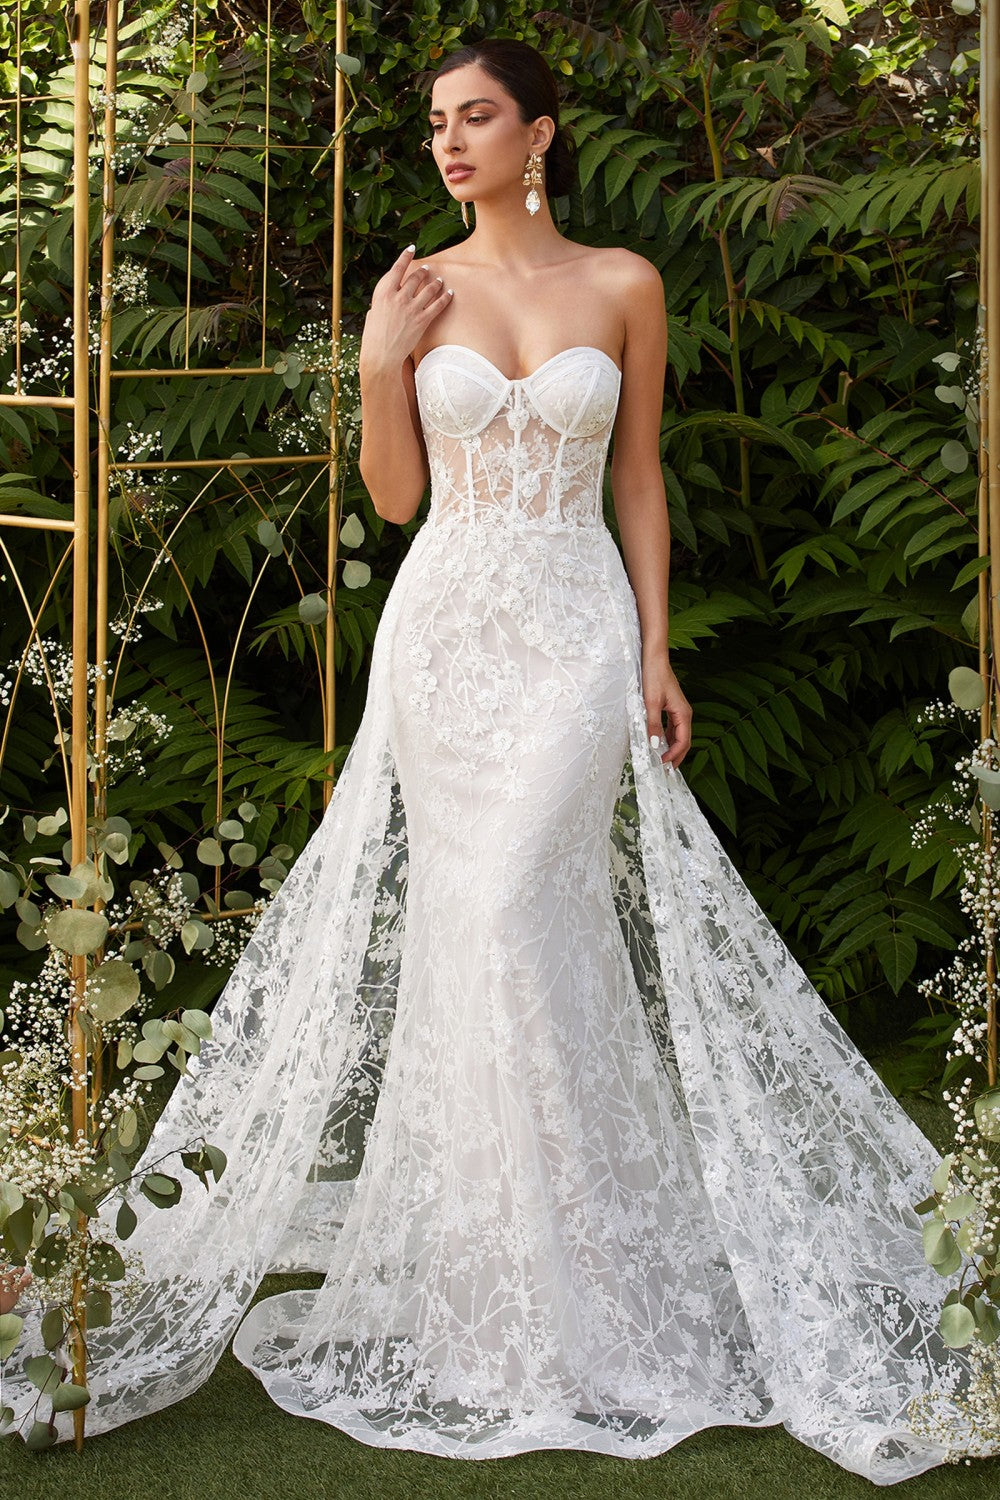 Sassi Holford Ursula Sample Wedding Dress Size 12 | eBay